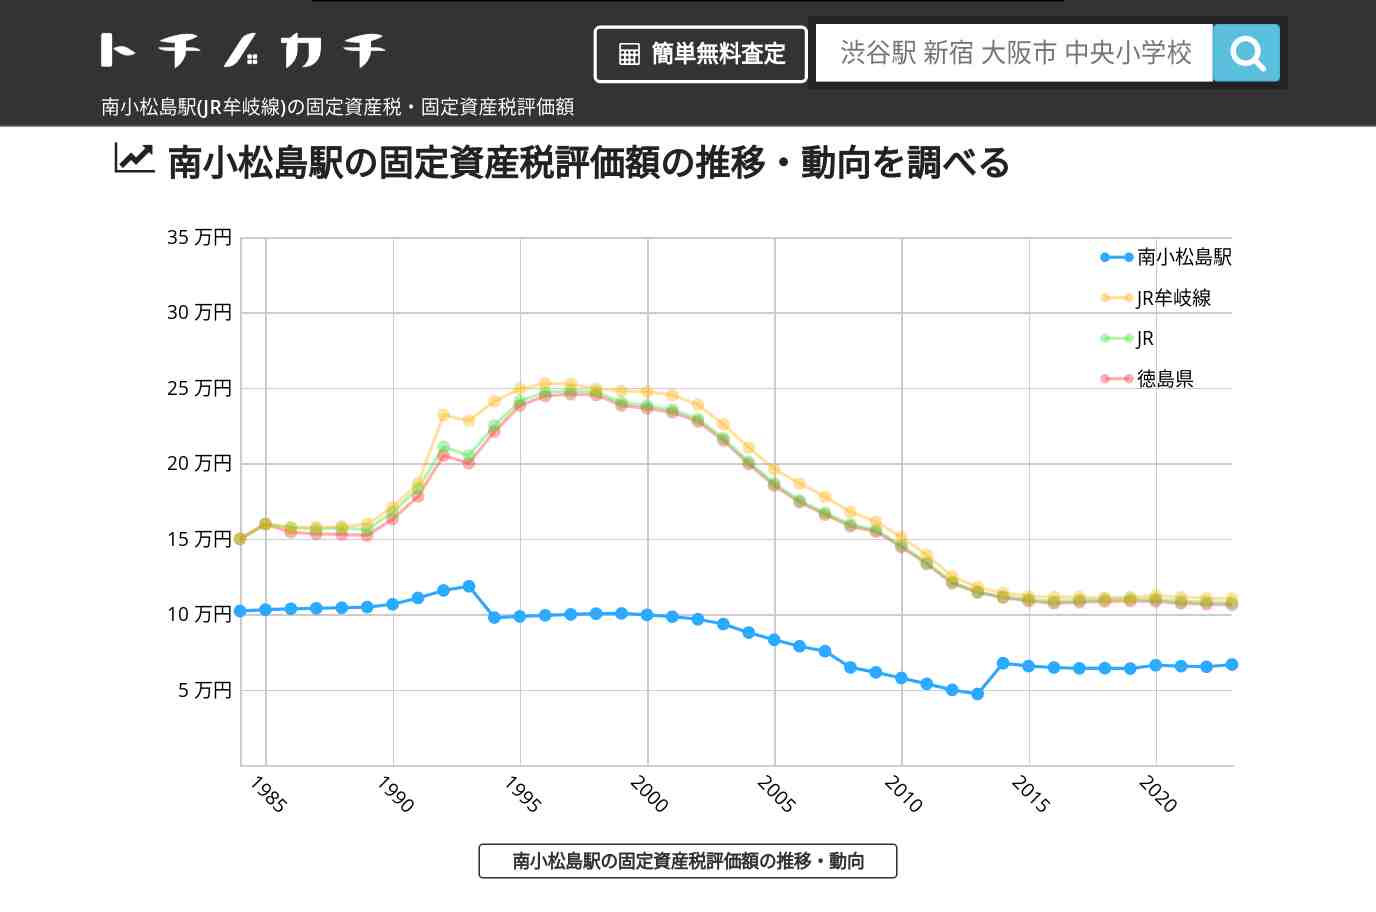 南小松島駅(JR牟岐線)の固定資産税・固定資産税評価額 | トチノカチ